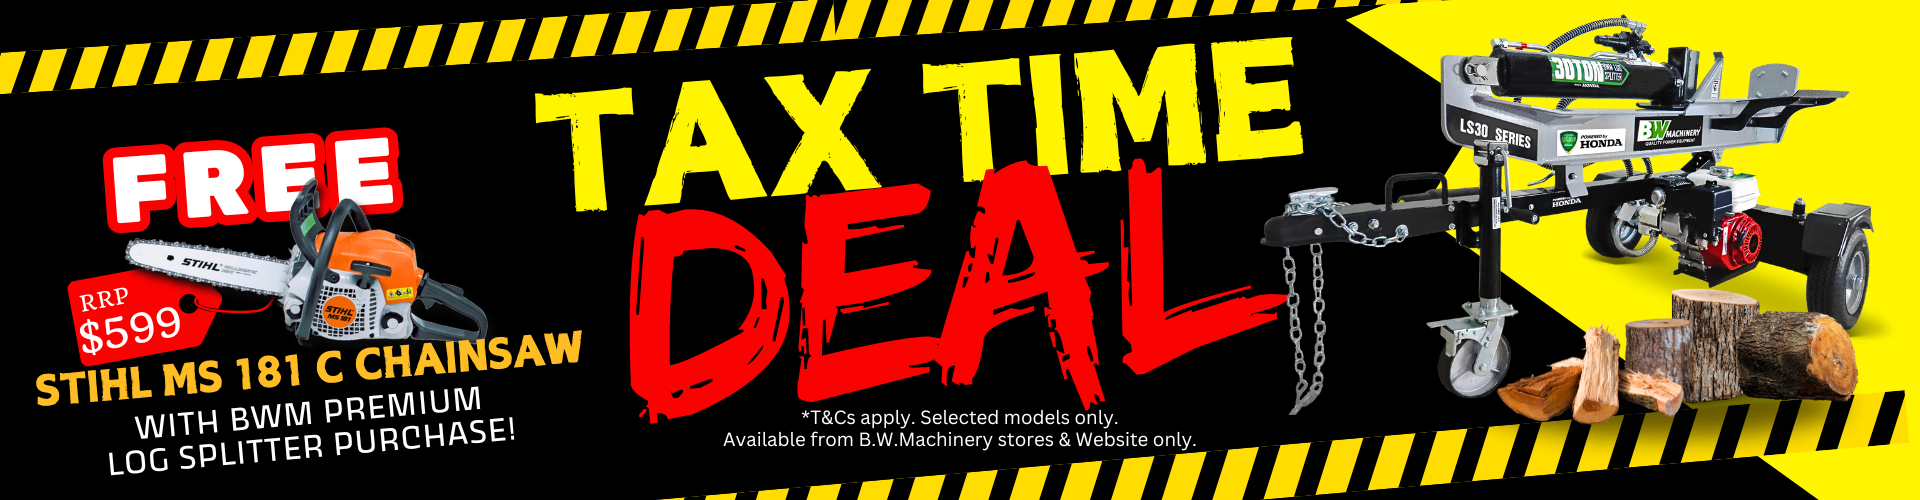 Tax-time-deal-Log-Splitter-Slider-1920x500-2